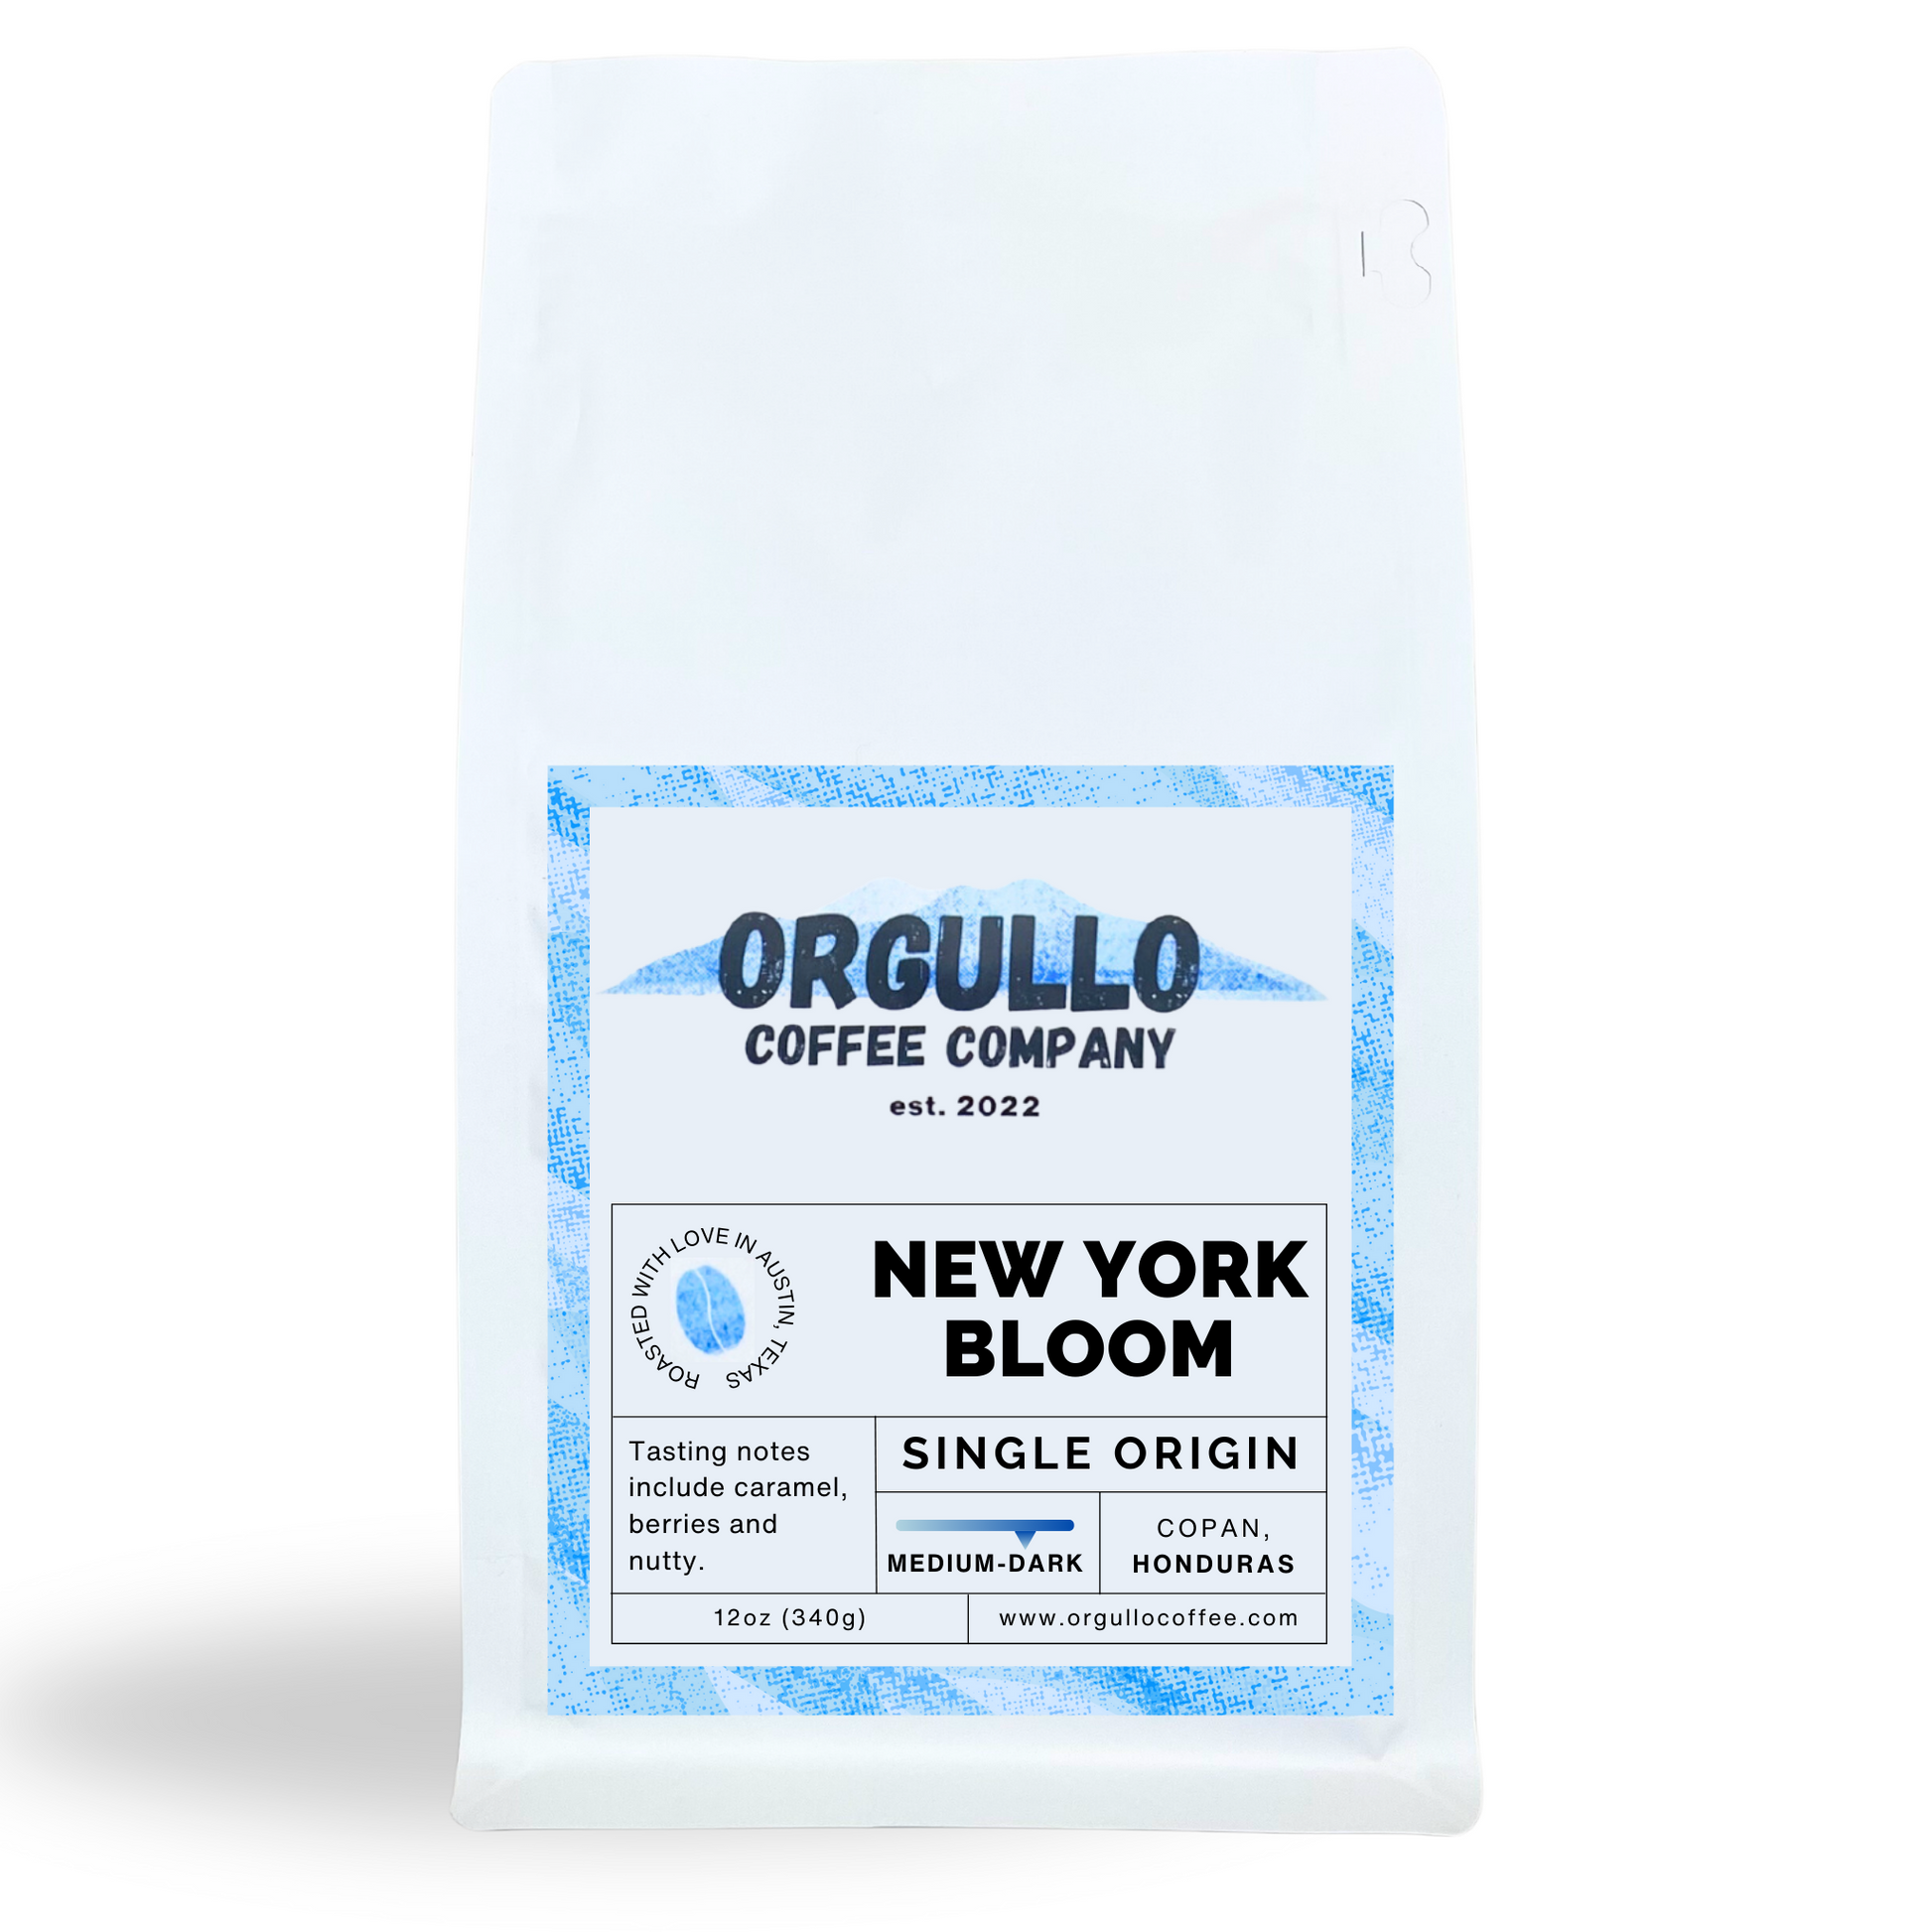 New York Bloom coffee bag